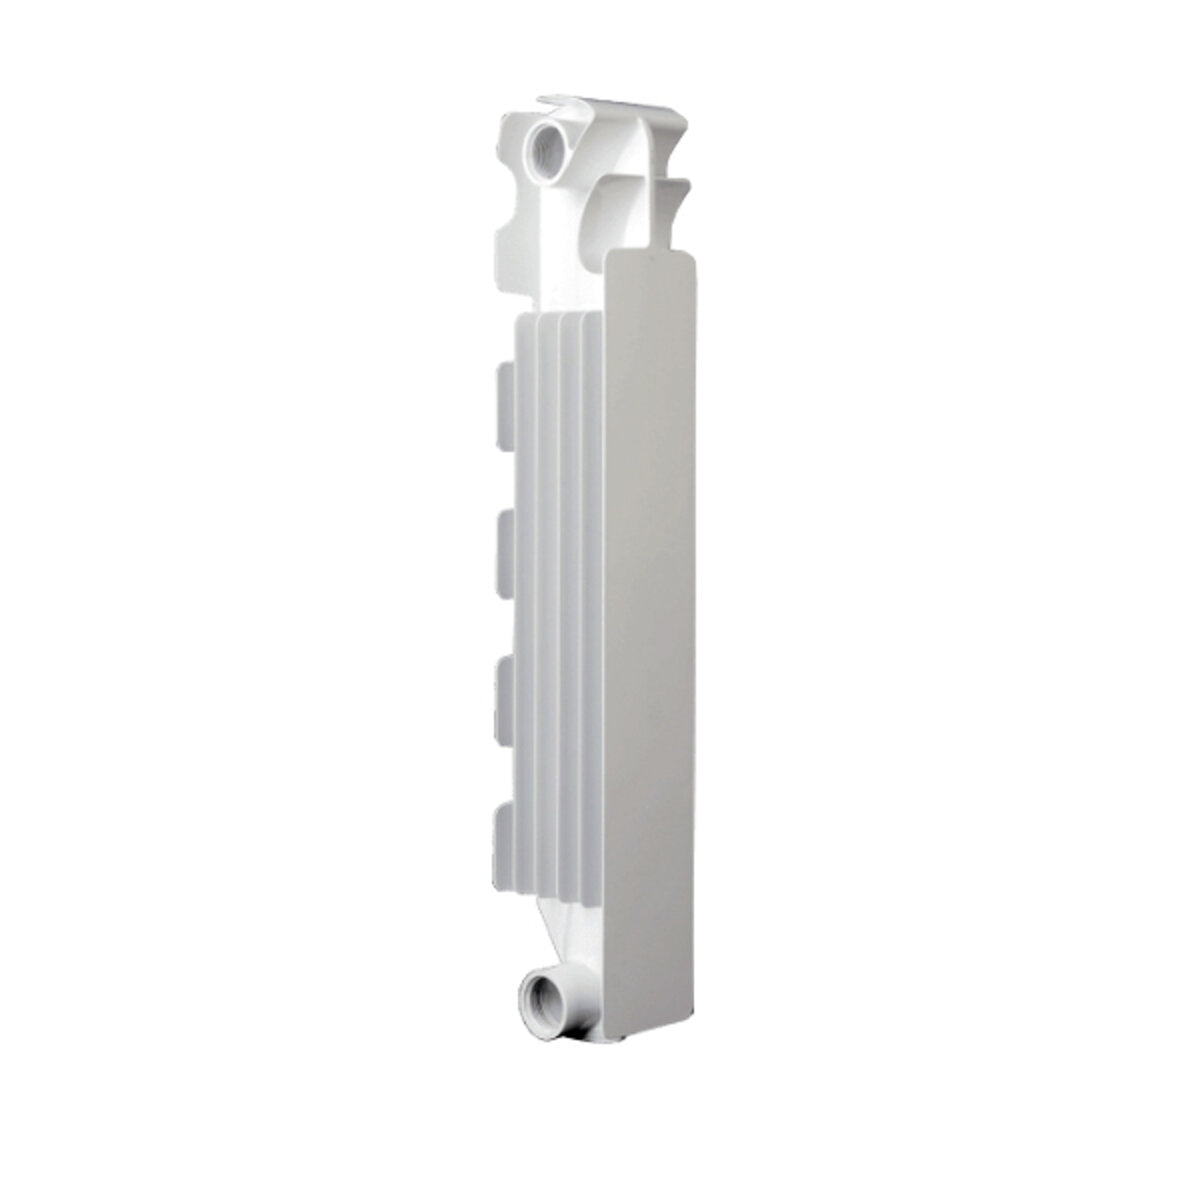 Fondital radiator in die-cast aluminum calidor super b4 single element center distance 350 mm